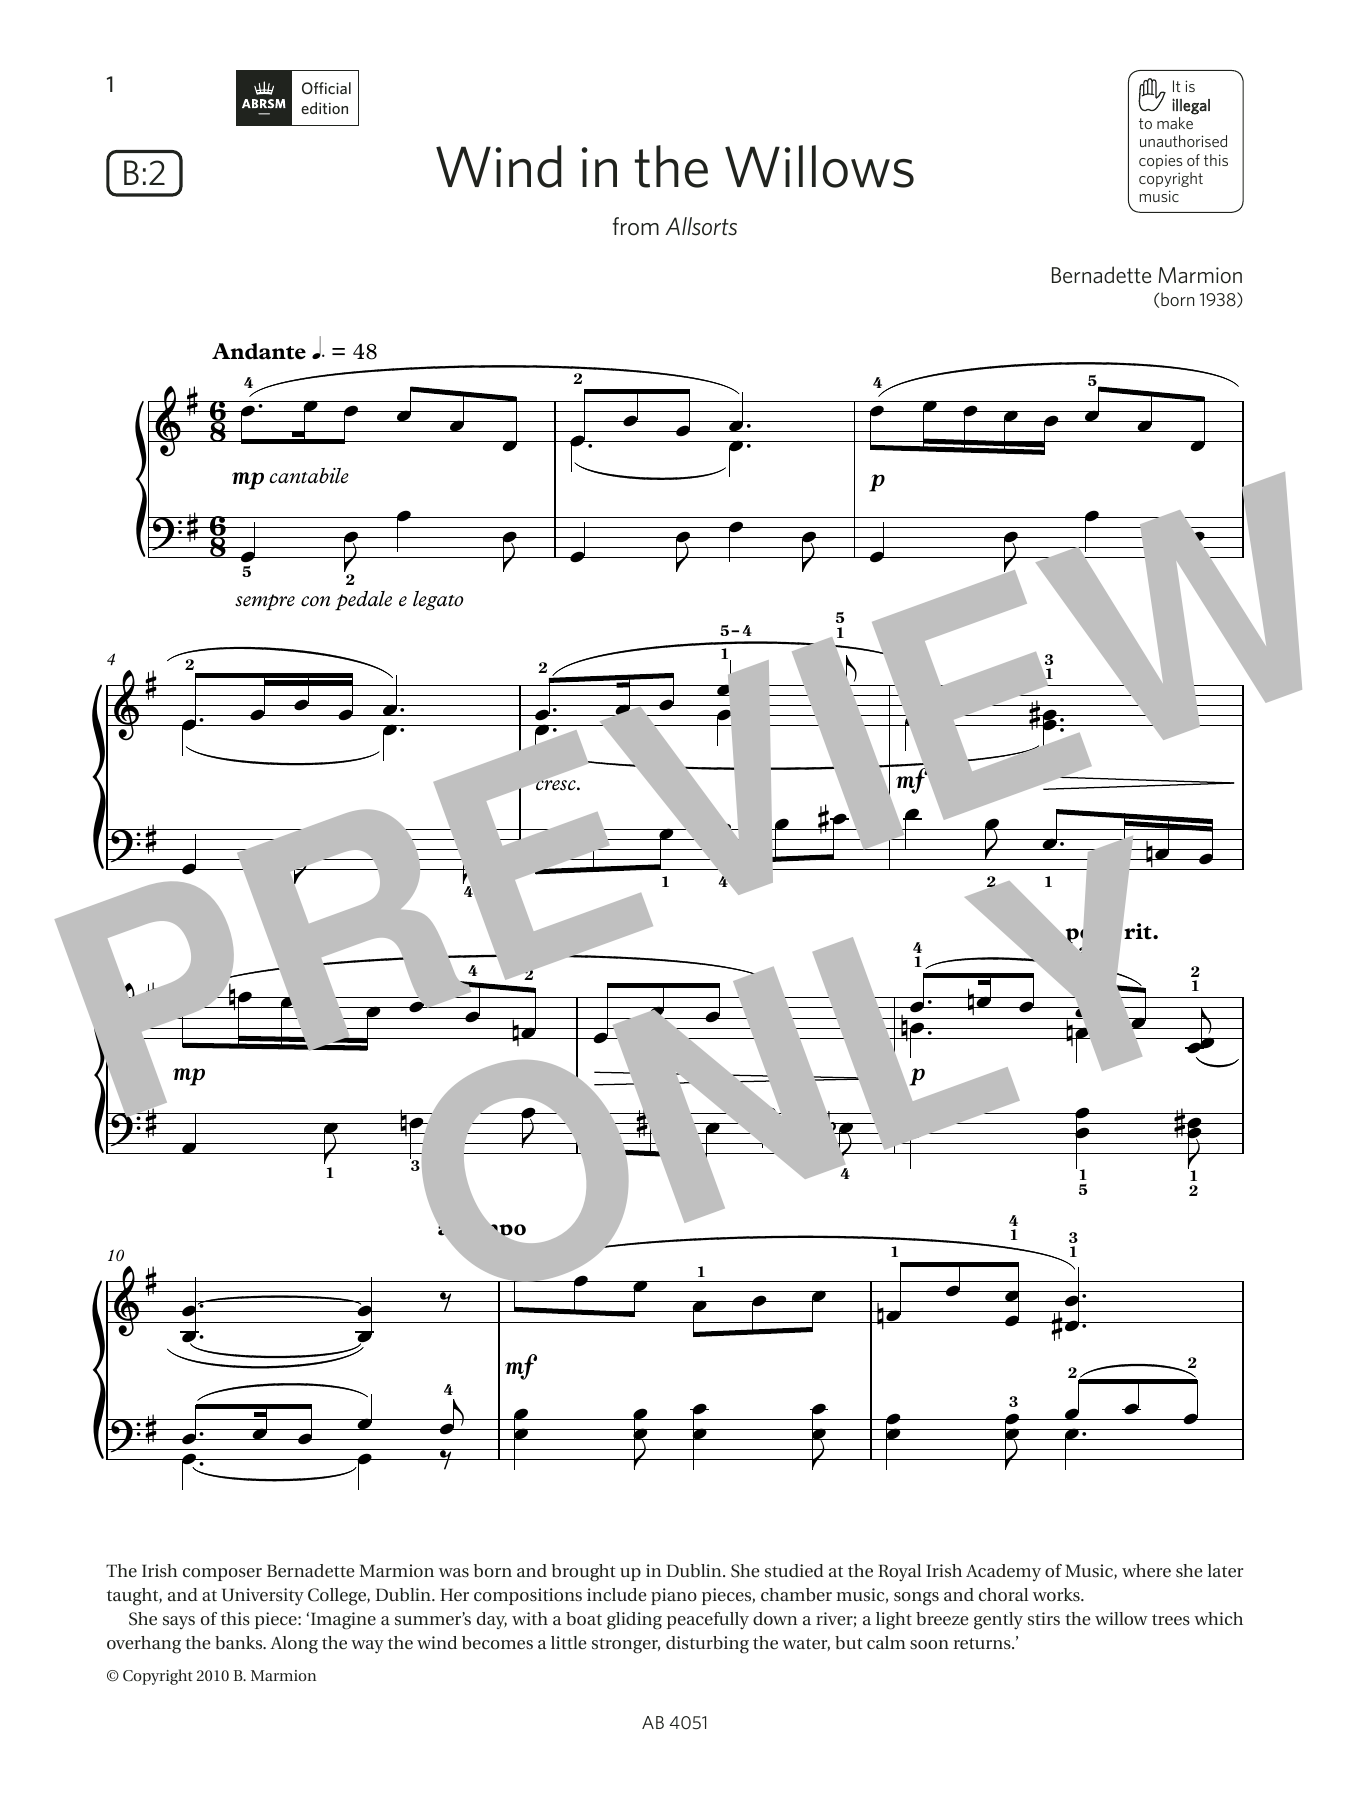 Download Bernadette Marmion Wind in the Willows (Grade 5, list B2, Sheet Music